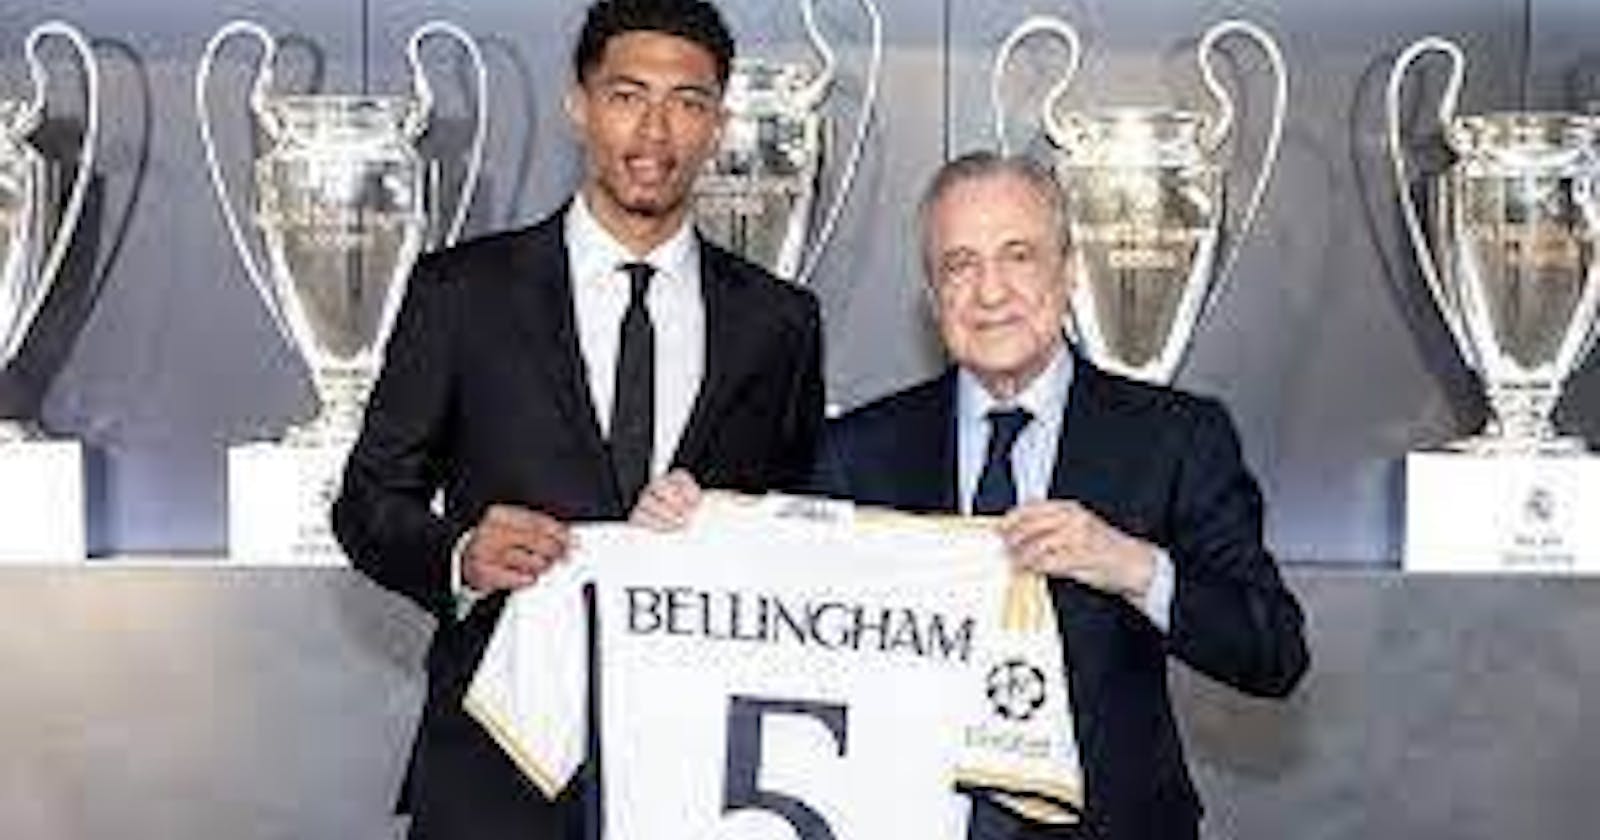 Bellingham deal Madrid